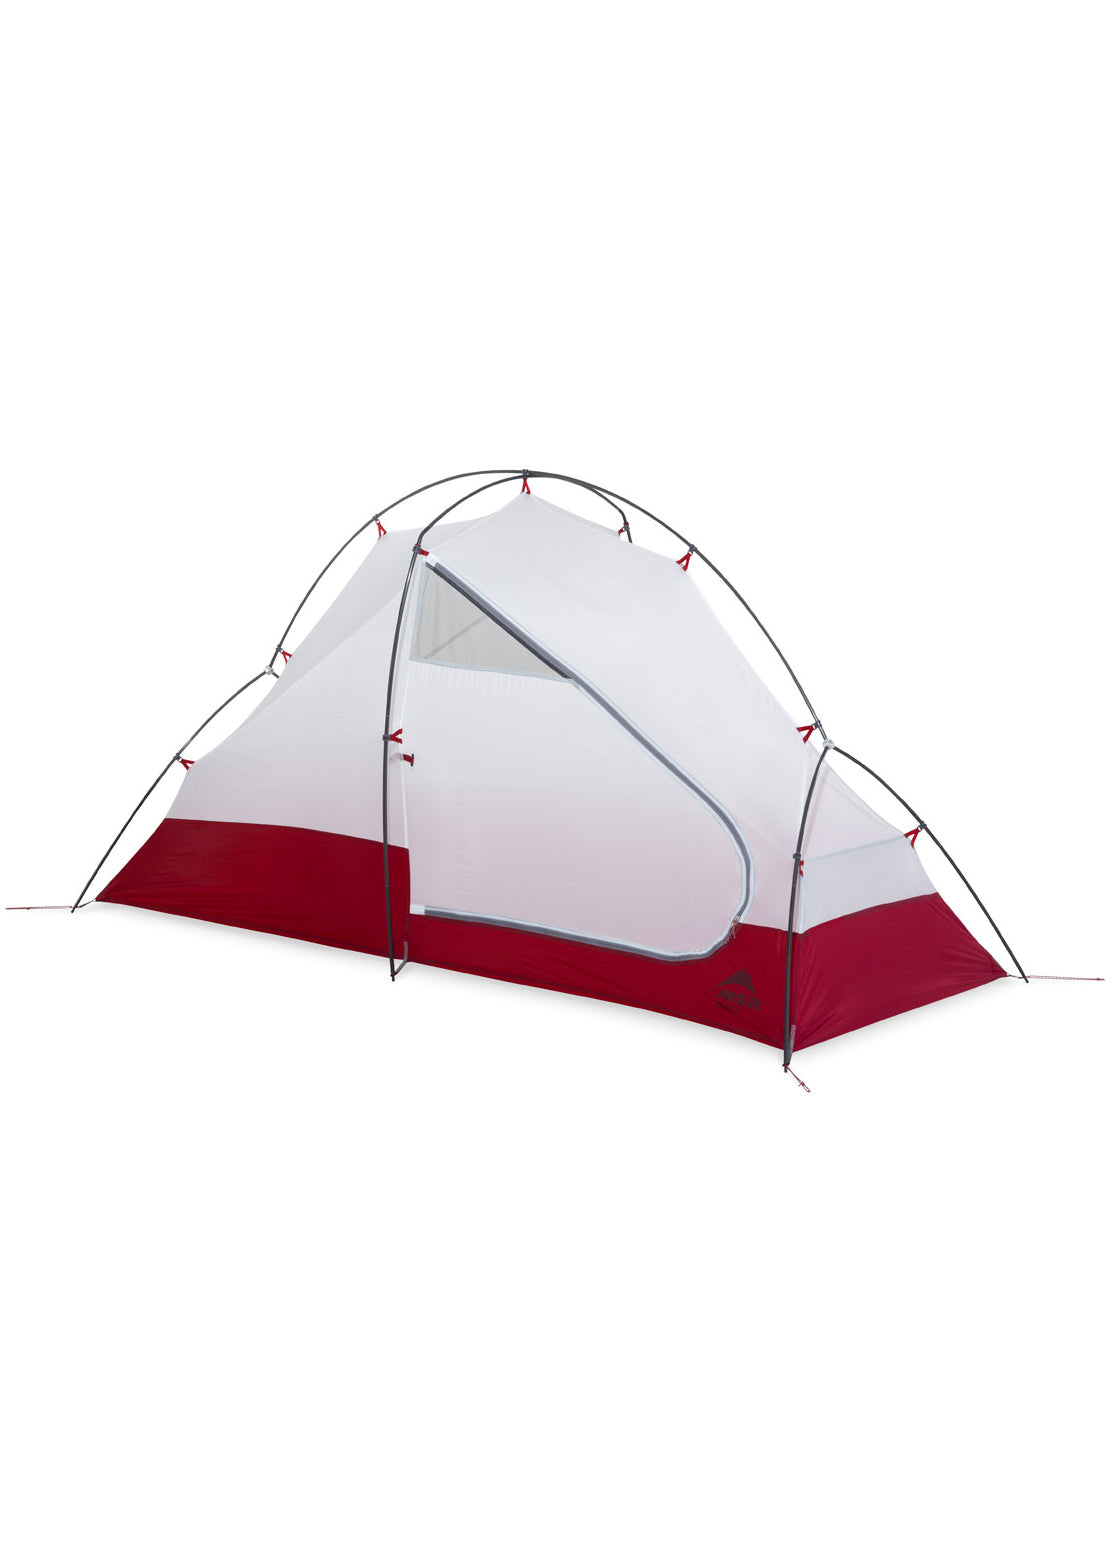 MSR Access 1 Ultralight Four Season Solo Tent